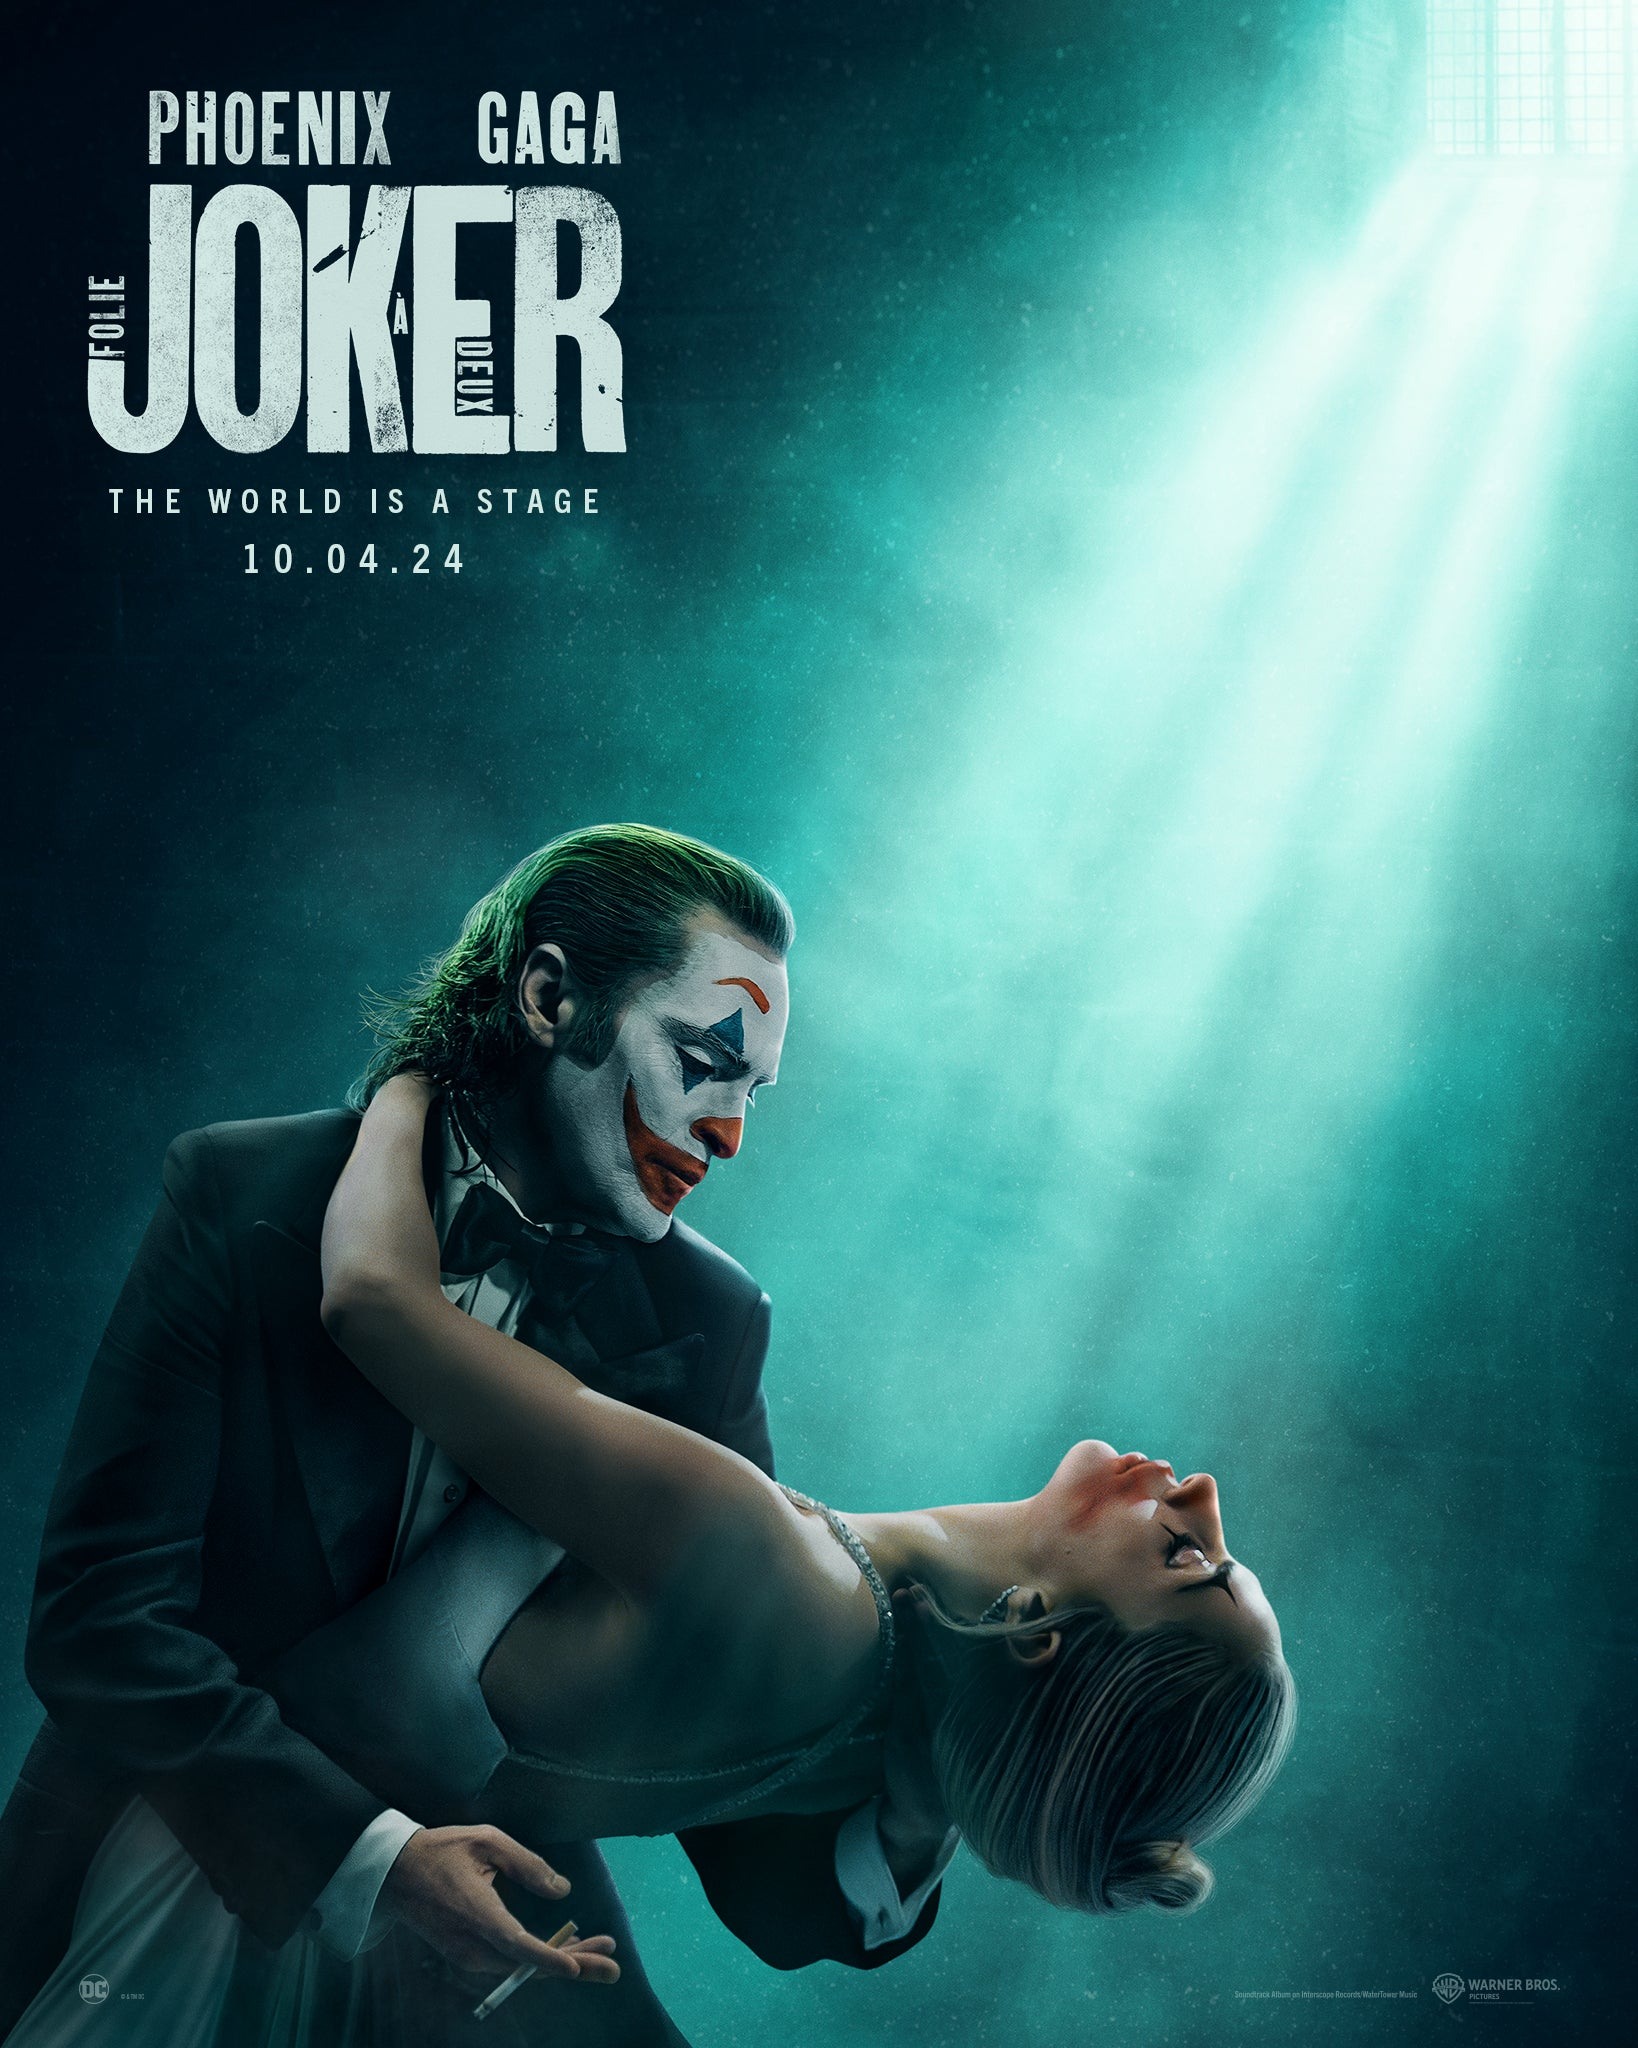 Joker Folie à Deux İlk Poster